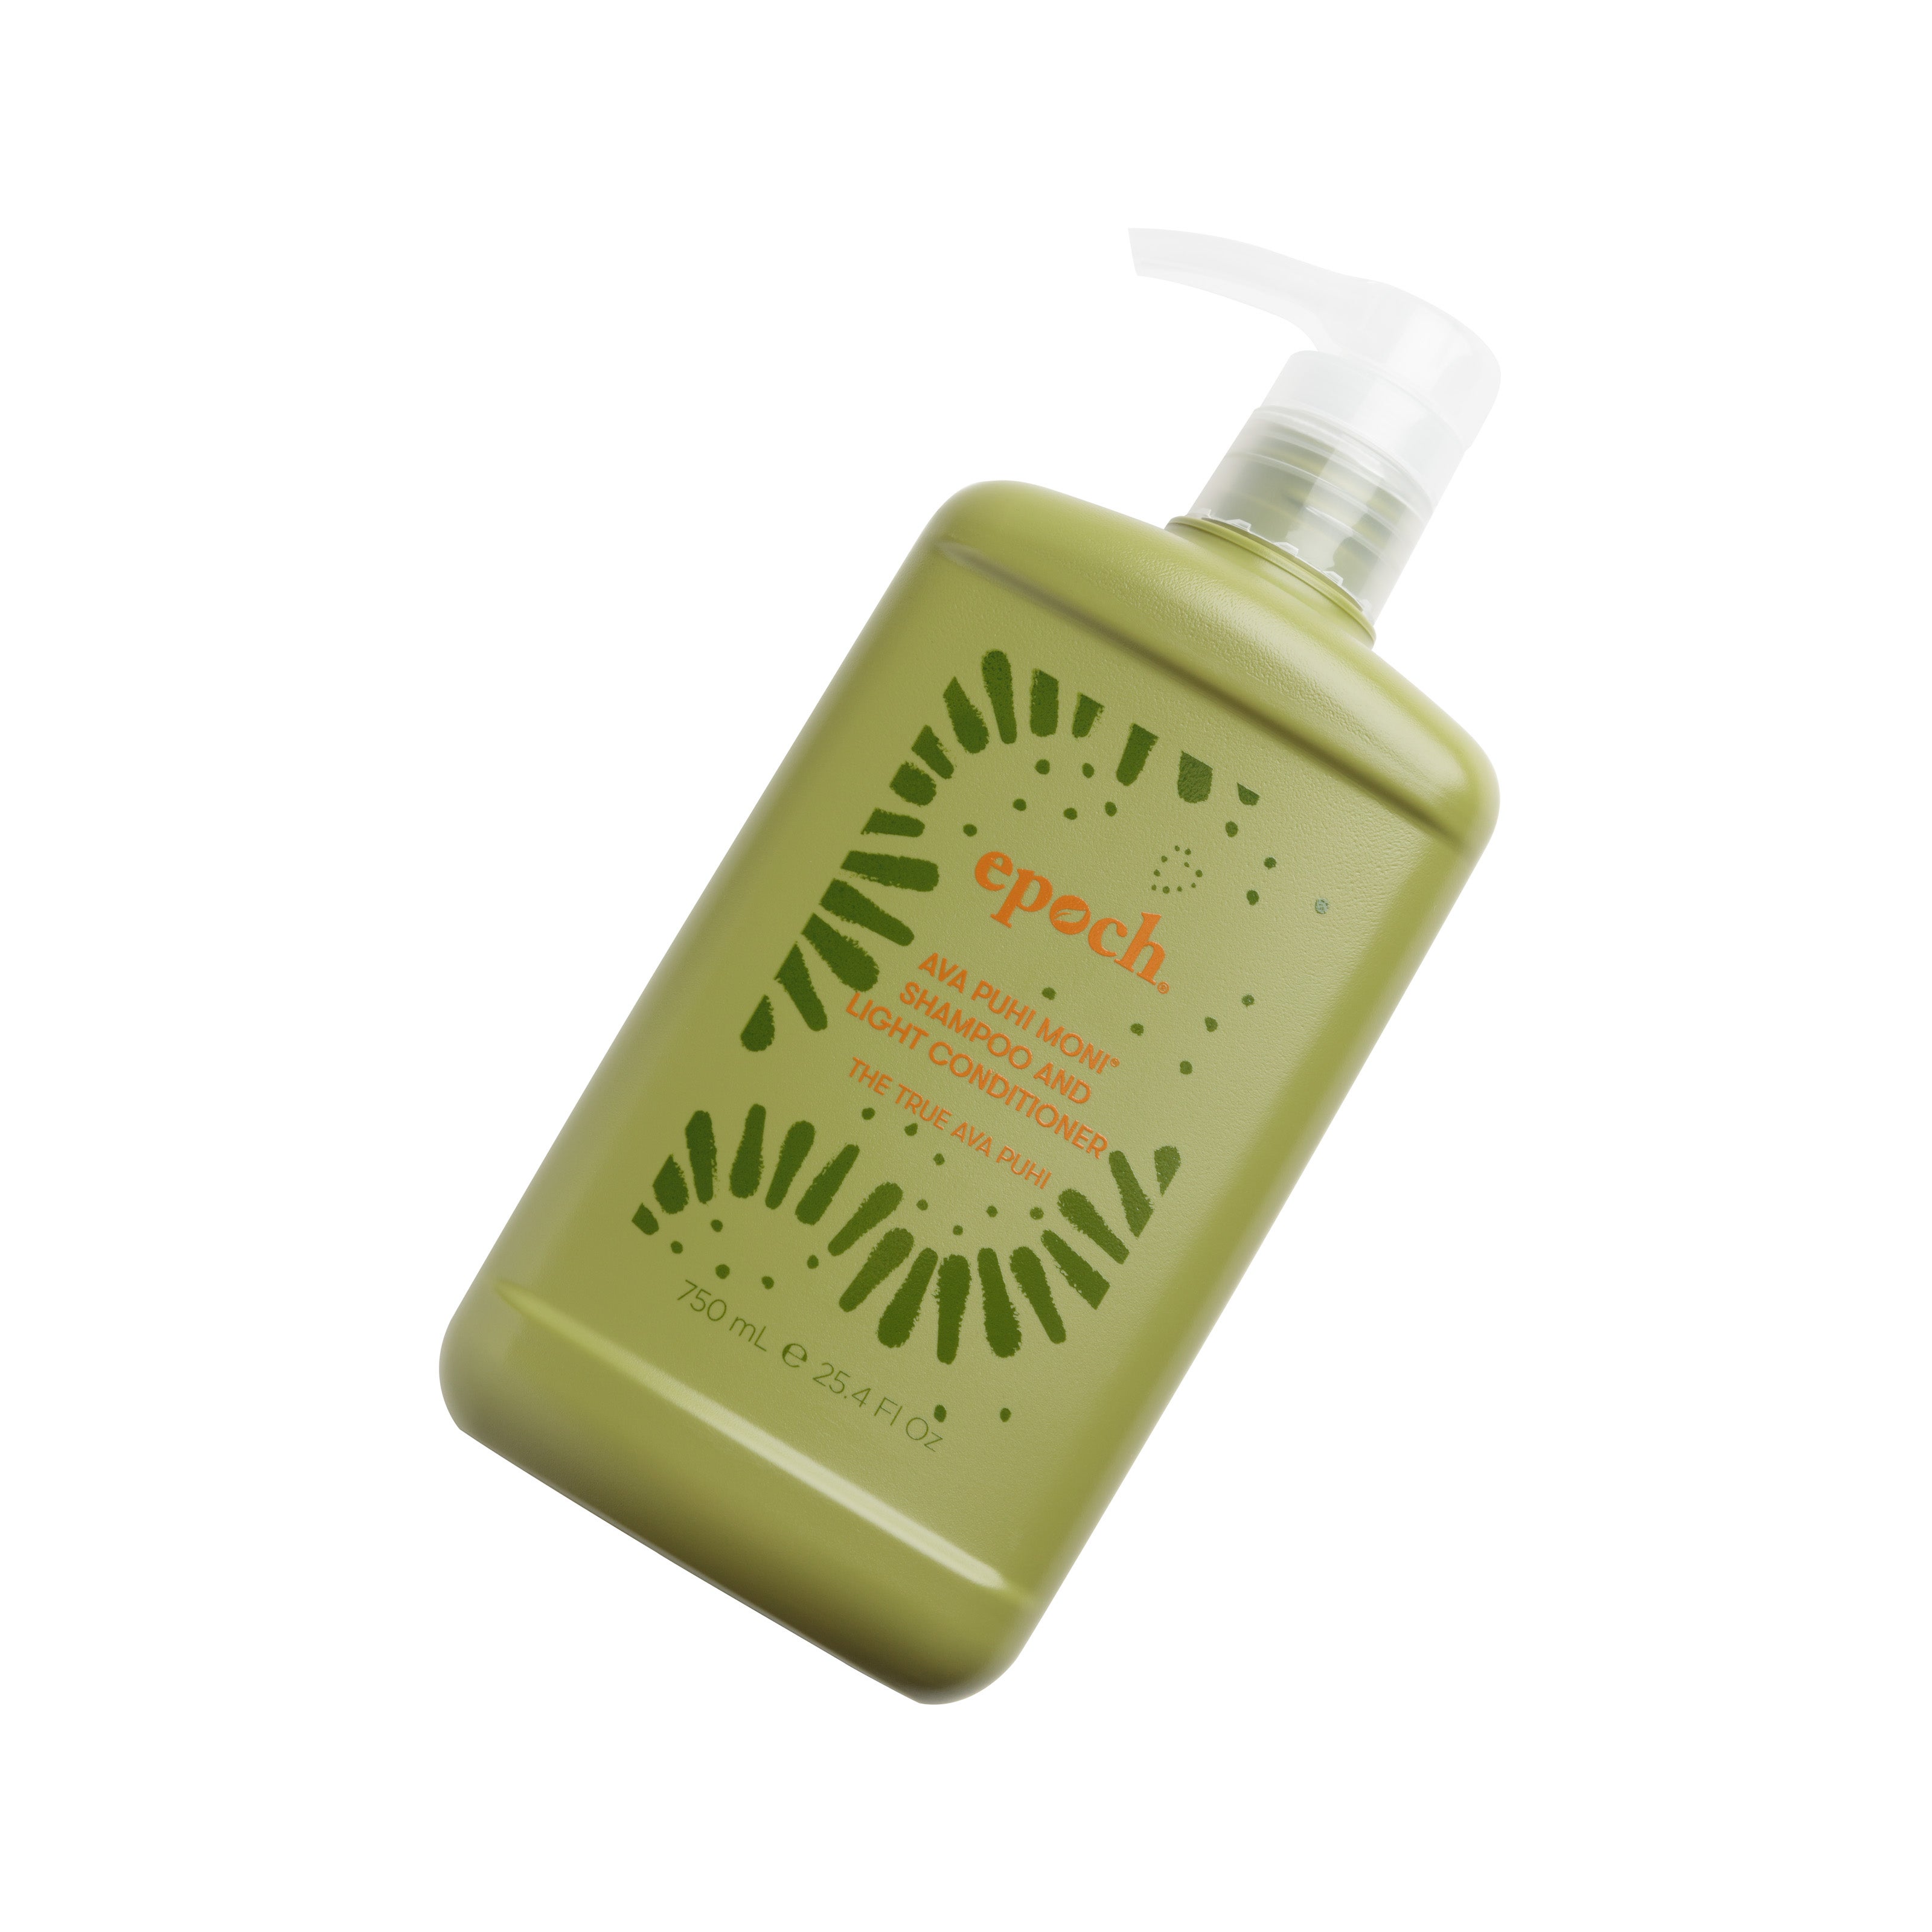 Epoch® Ava Puhi Moni® Shampoo and Light Conditioner (750ml)